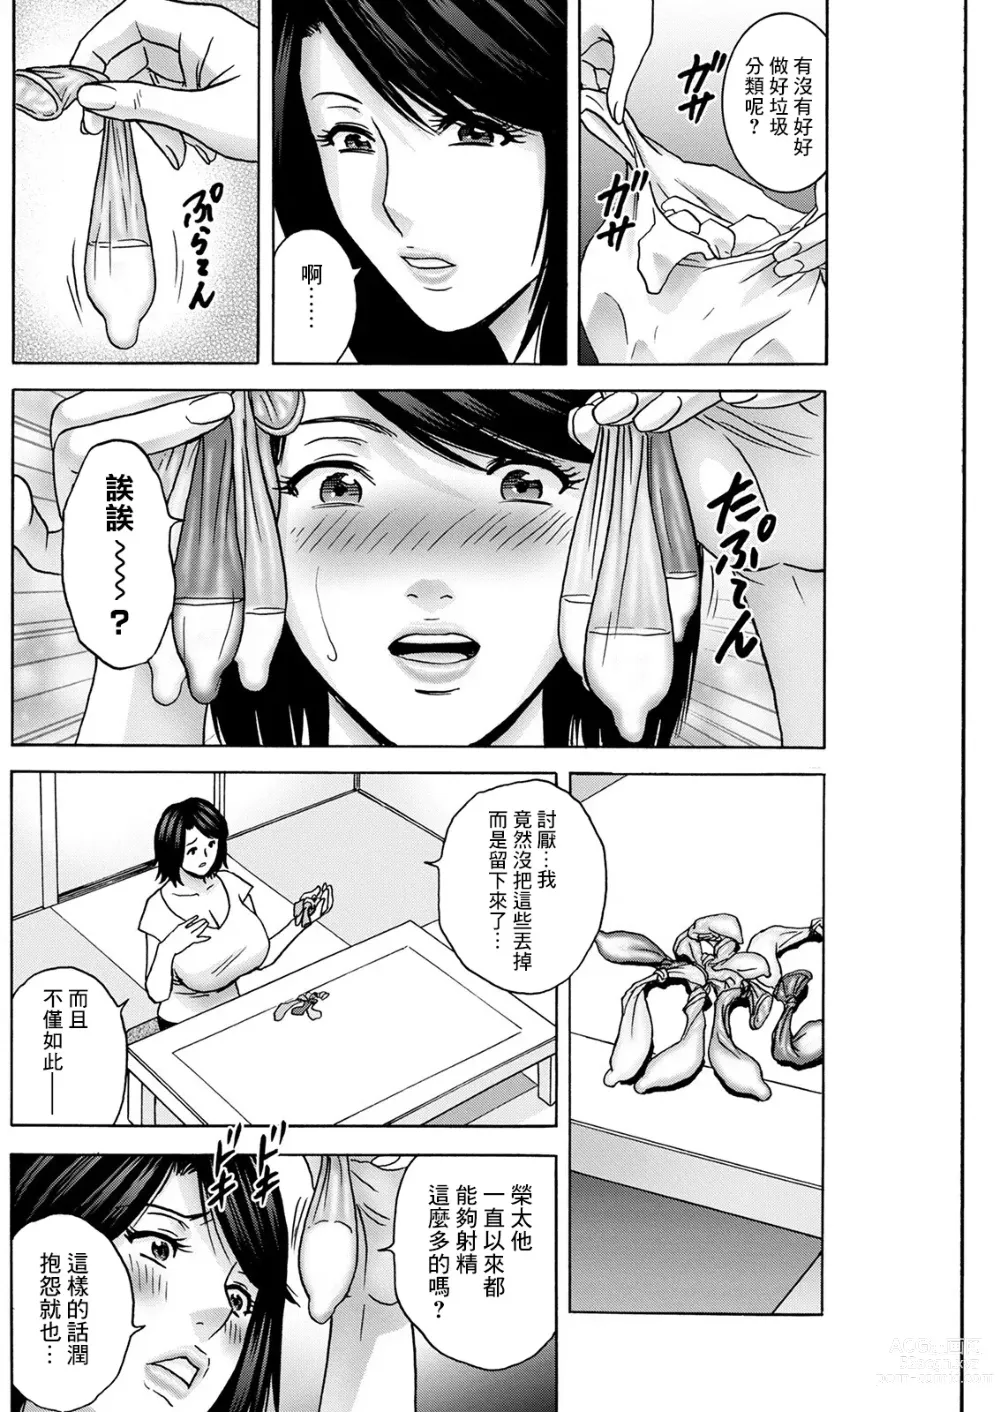 Page 8 of manga Torokeru Yome Haha Ch. 1